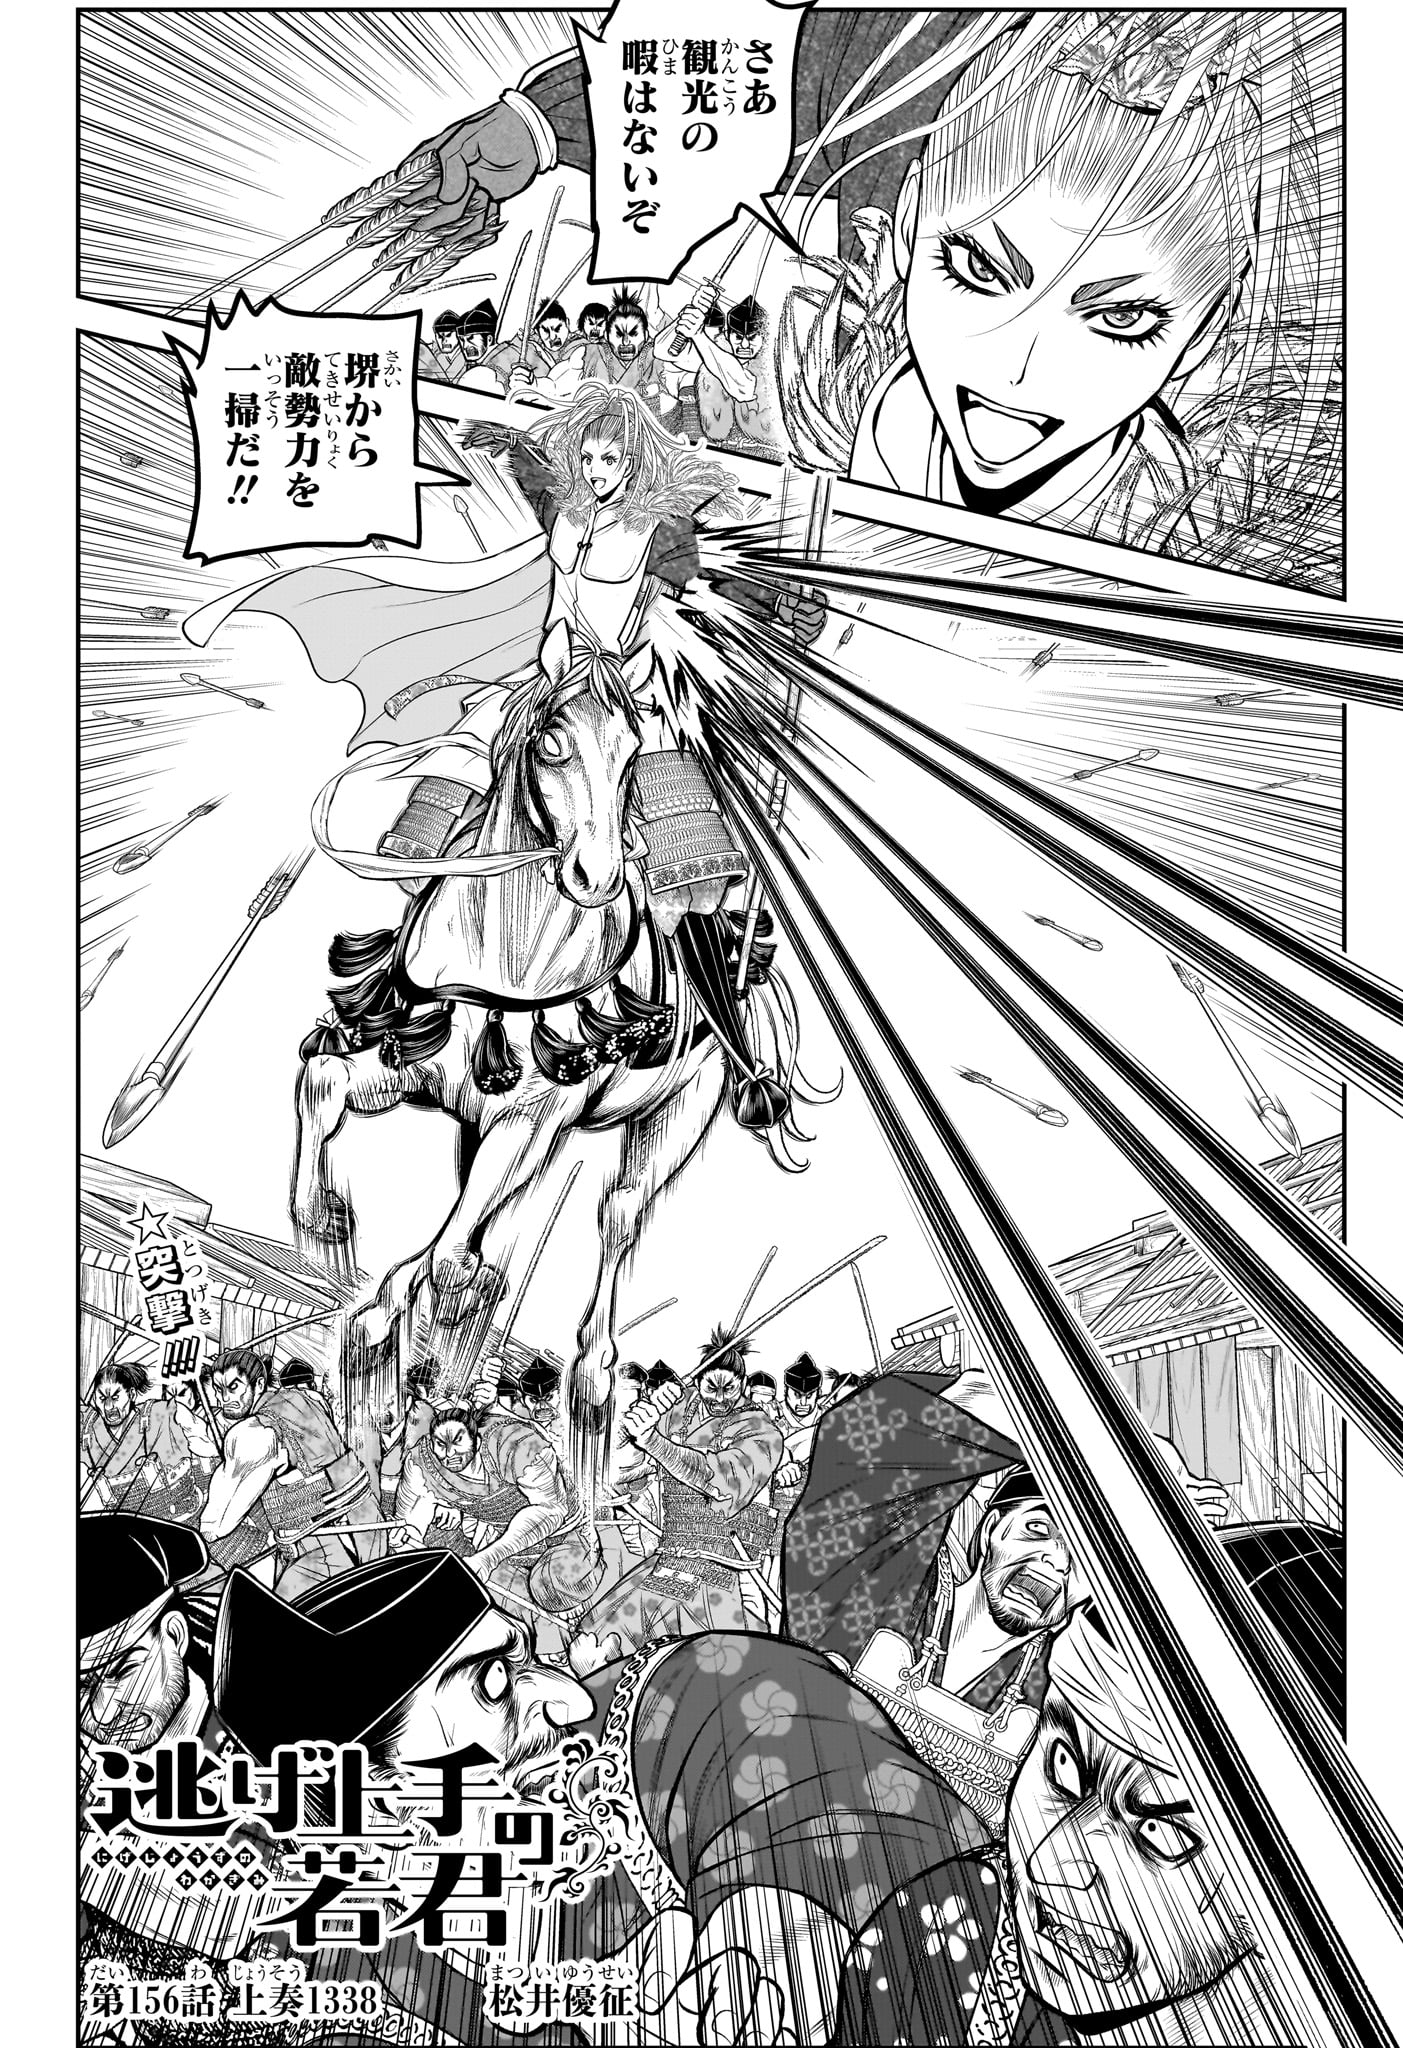 Nige Jouzu no Wakagimi - Chapter 156 - Page 2